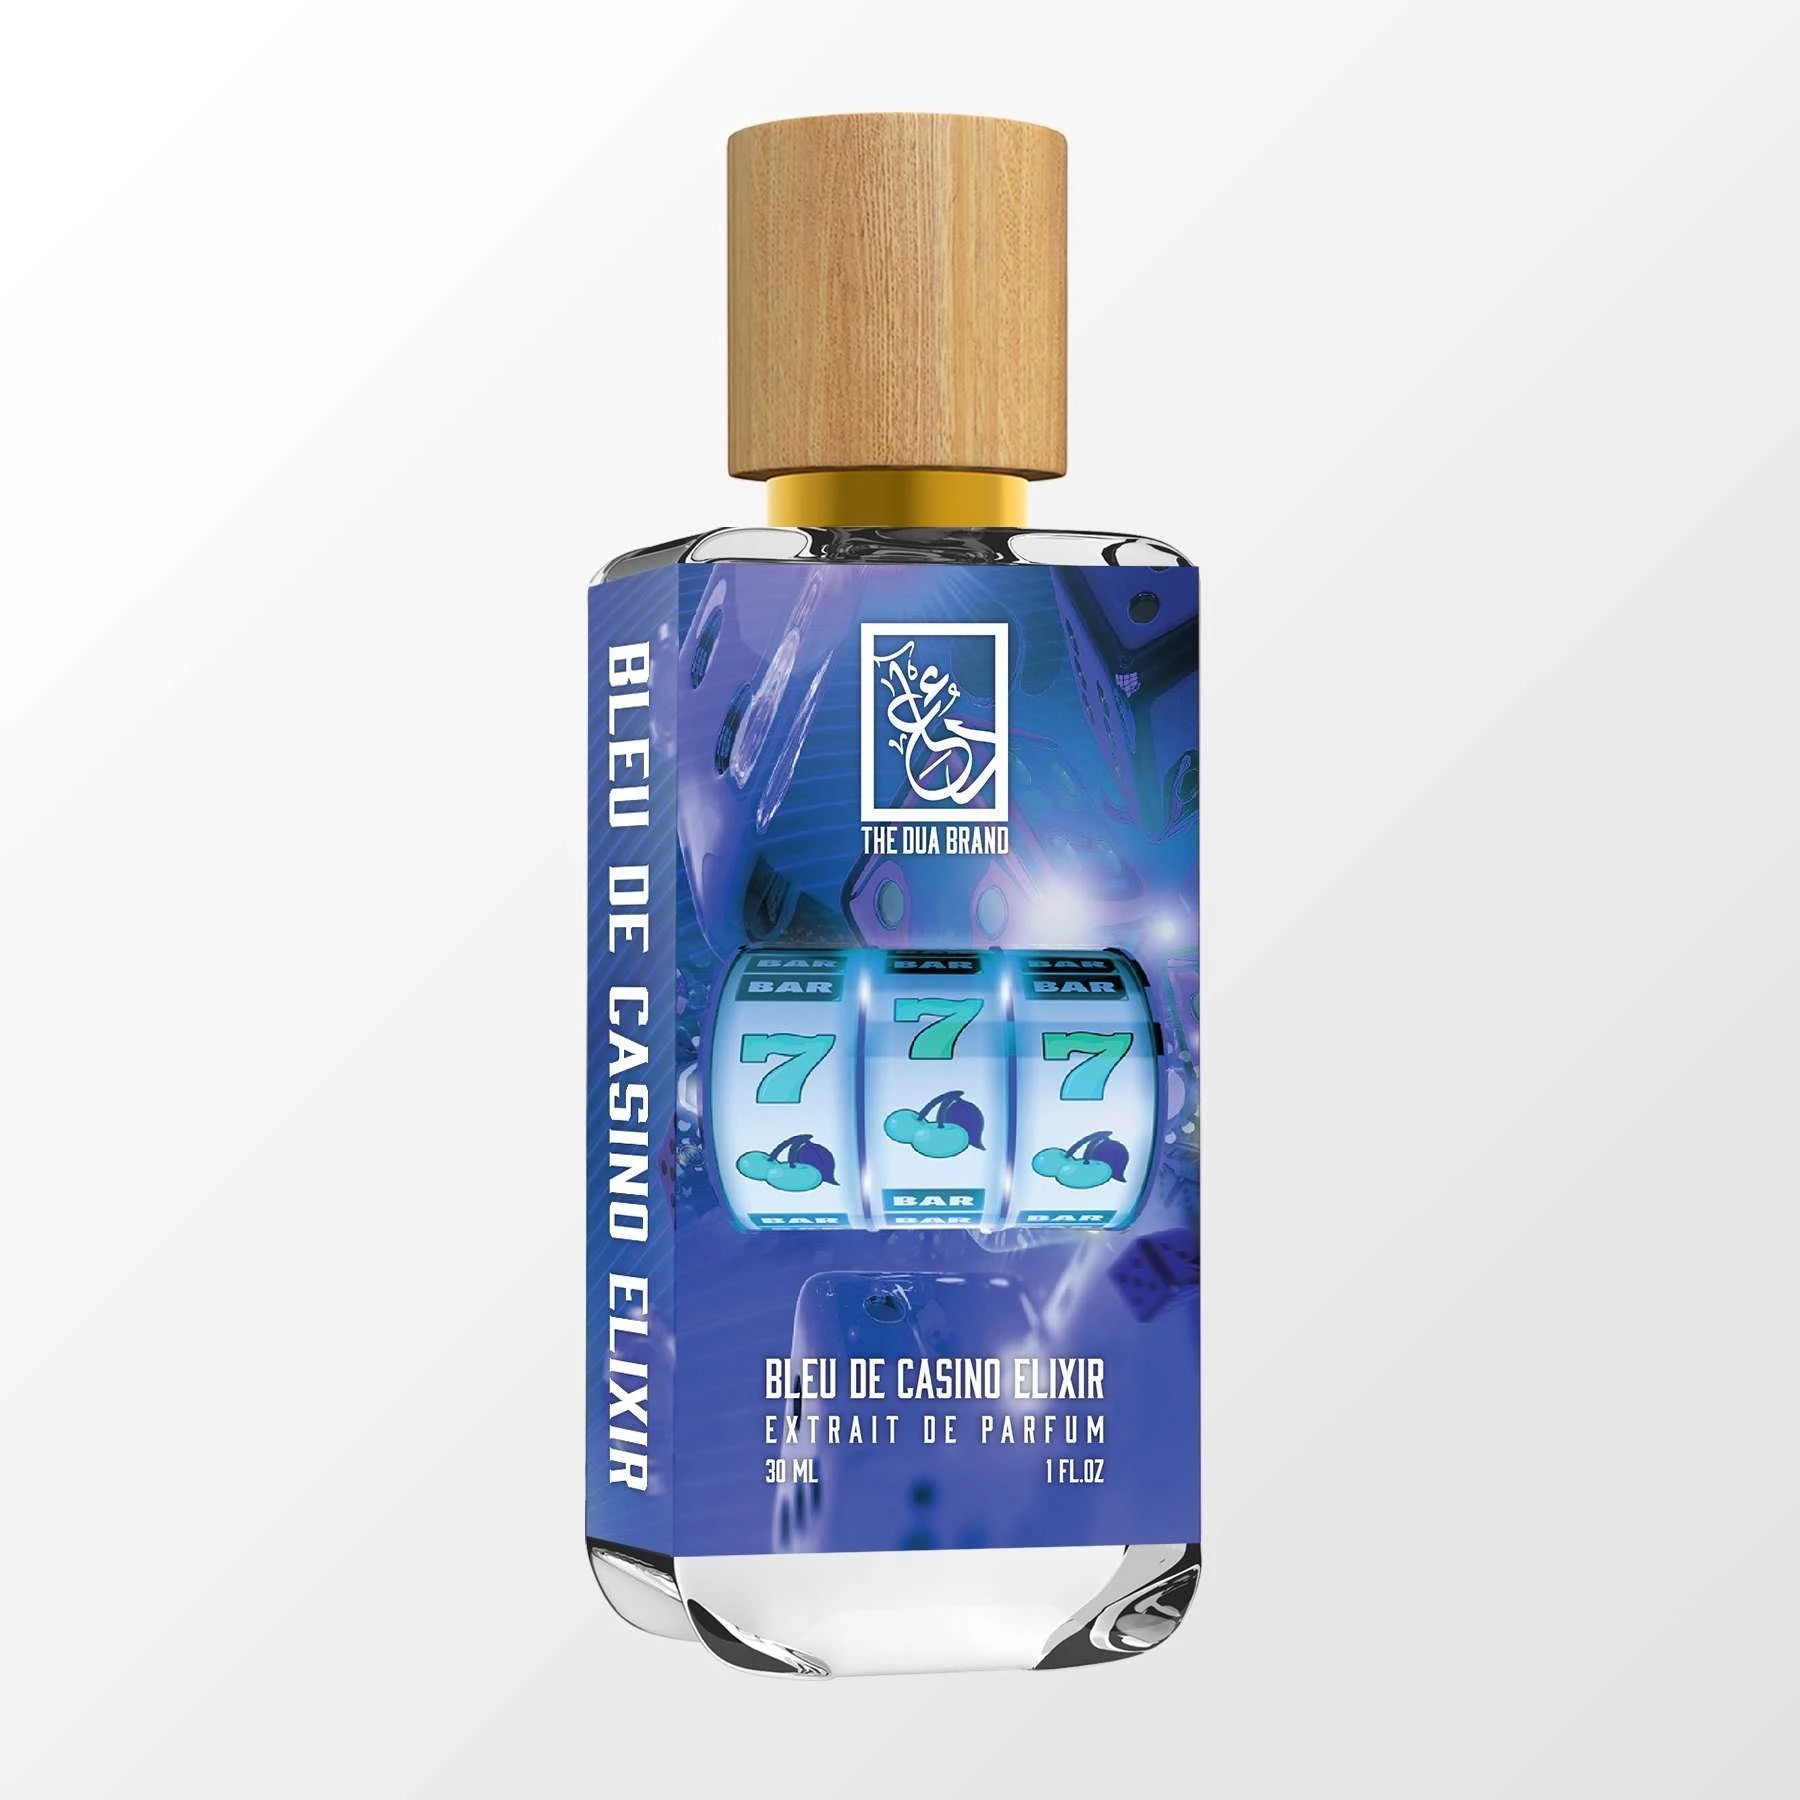 Chanel Bleu De Eau De Parfum Spray 50ml/1.7oz - Eau De Parfum